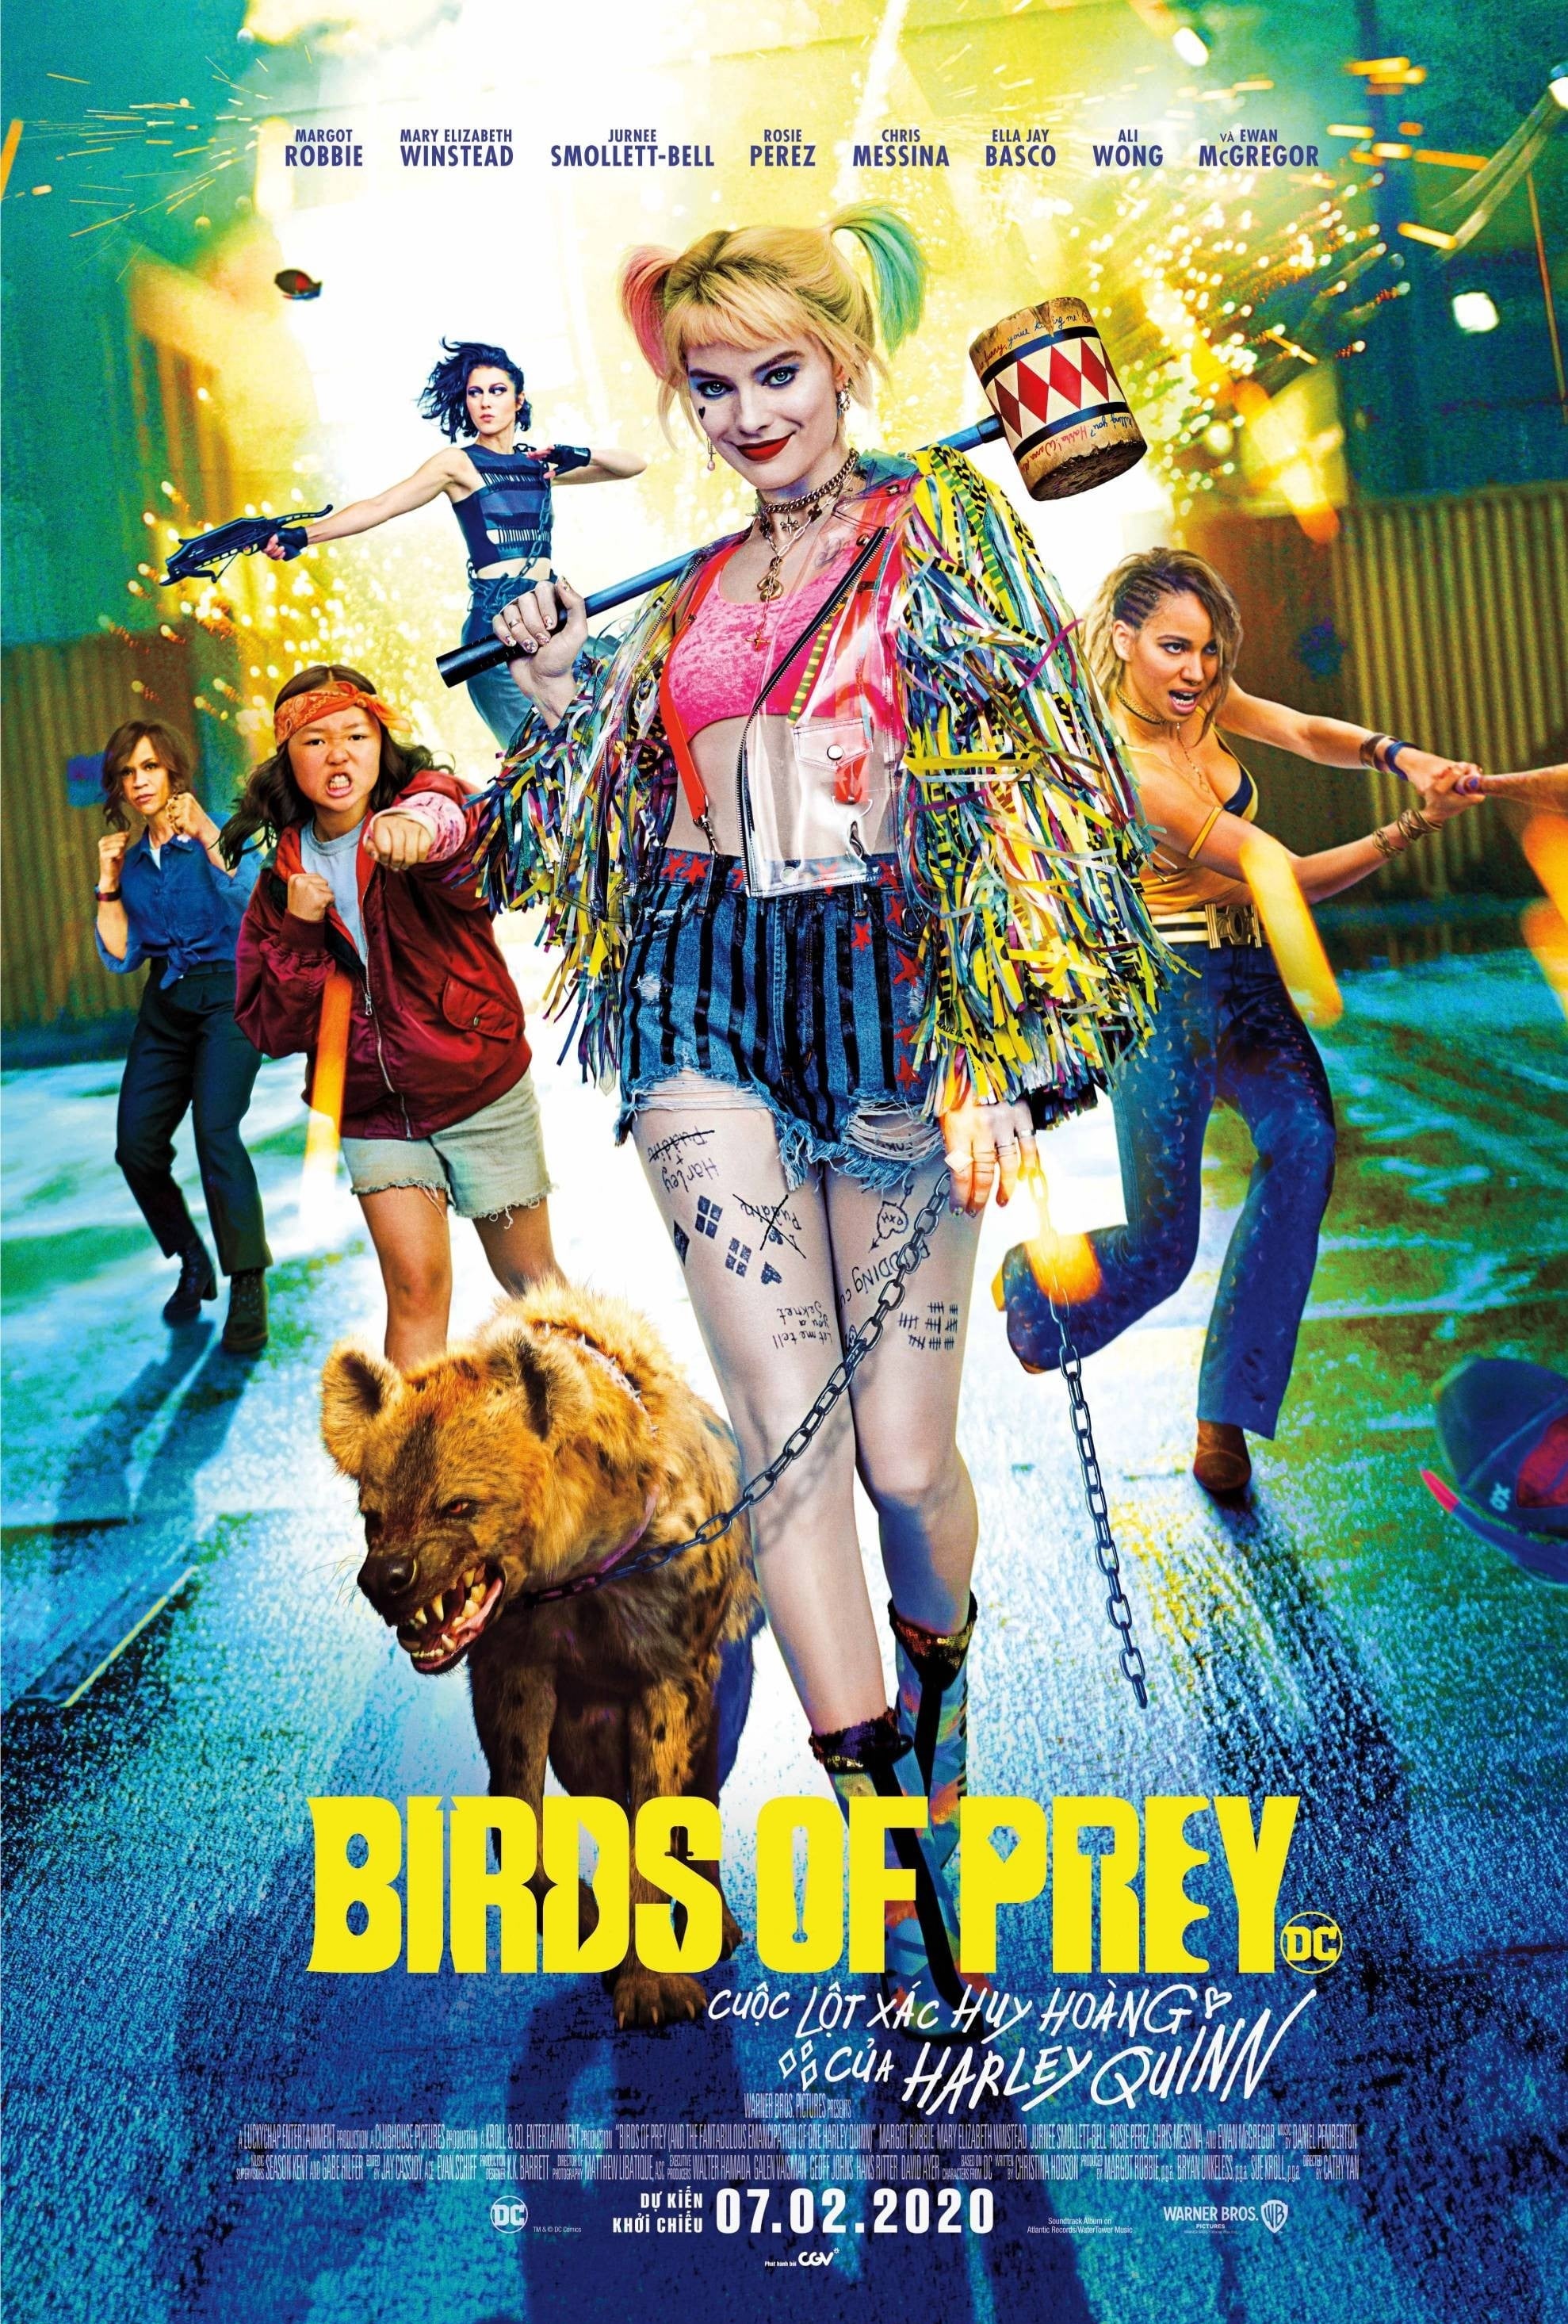 Birds of Prey: Cuộc Lột Xác Huy Hoàng Của Harley Quinn (Birds of Prey (and the Fantabulous Emancipation of One Harley Quinn)) [2020]